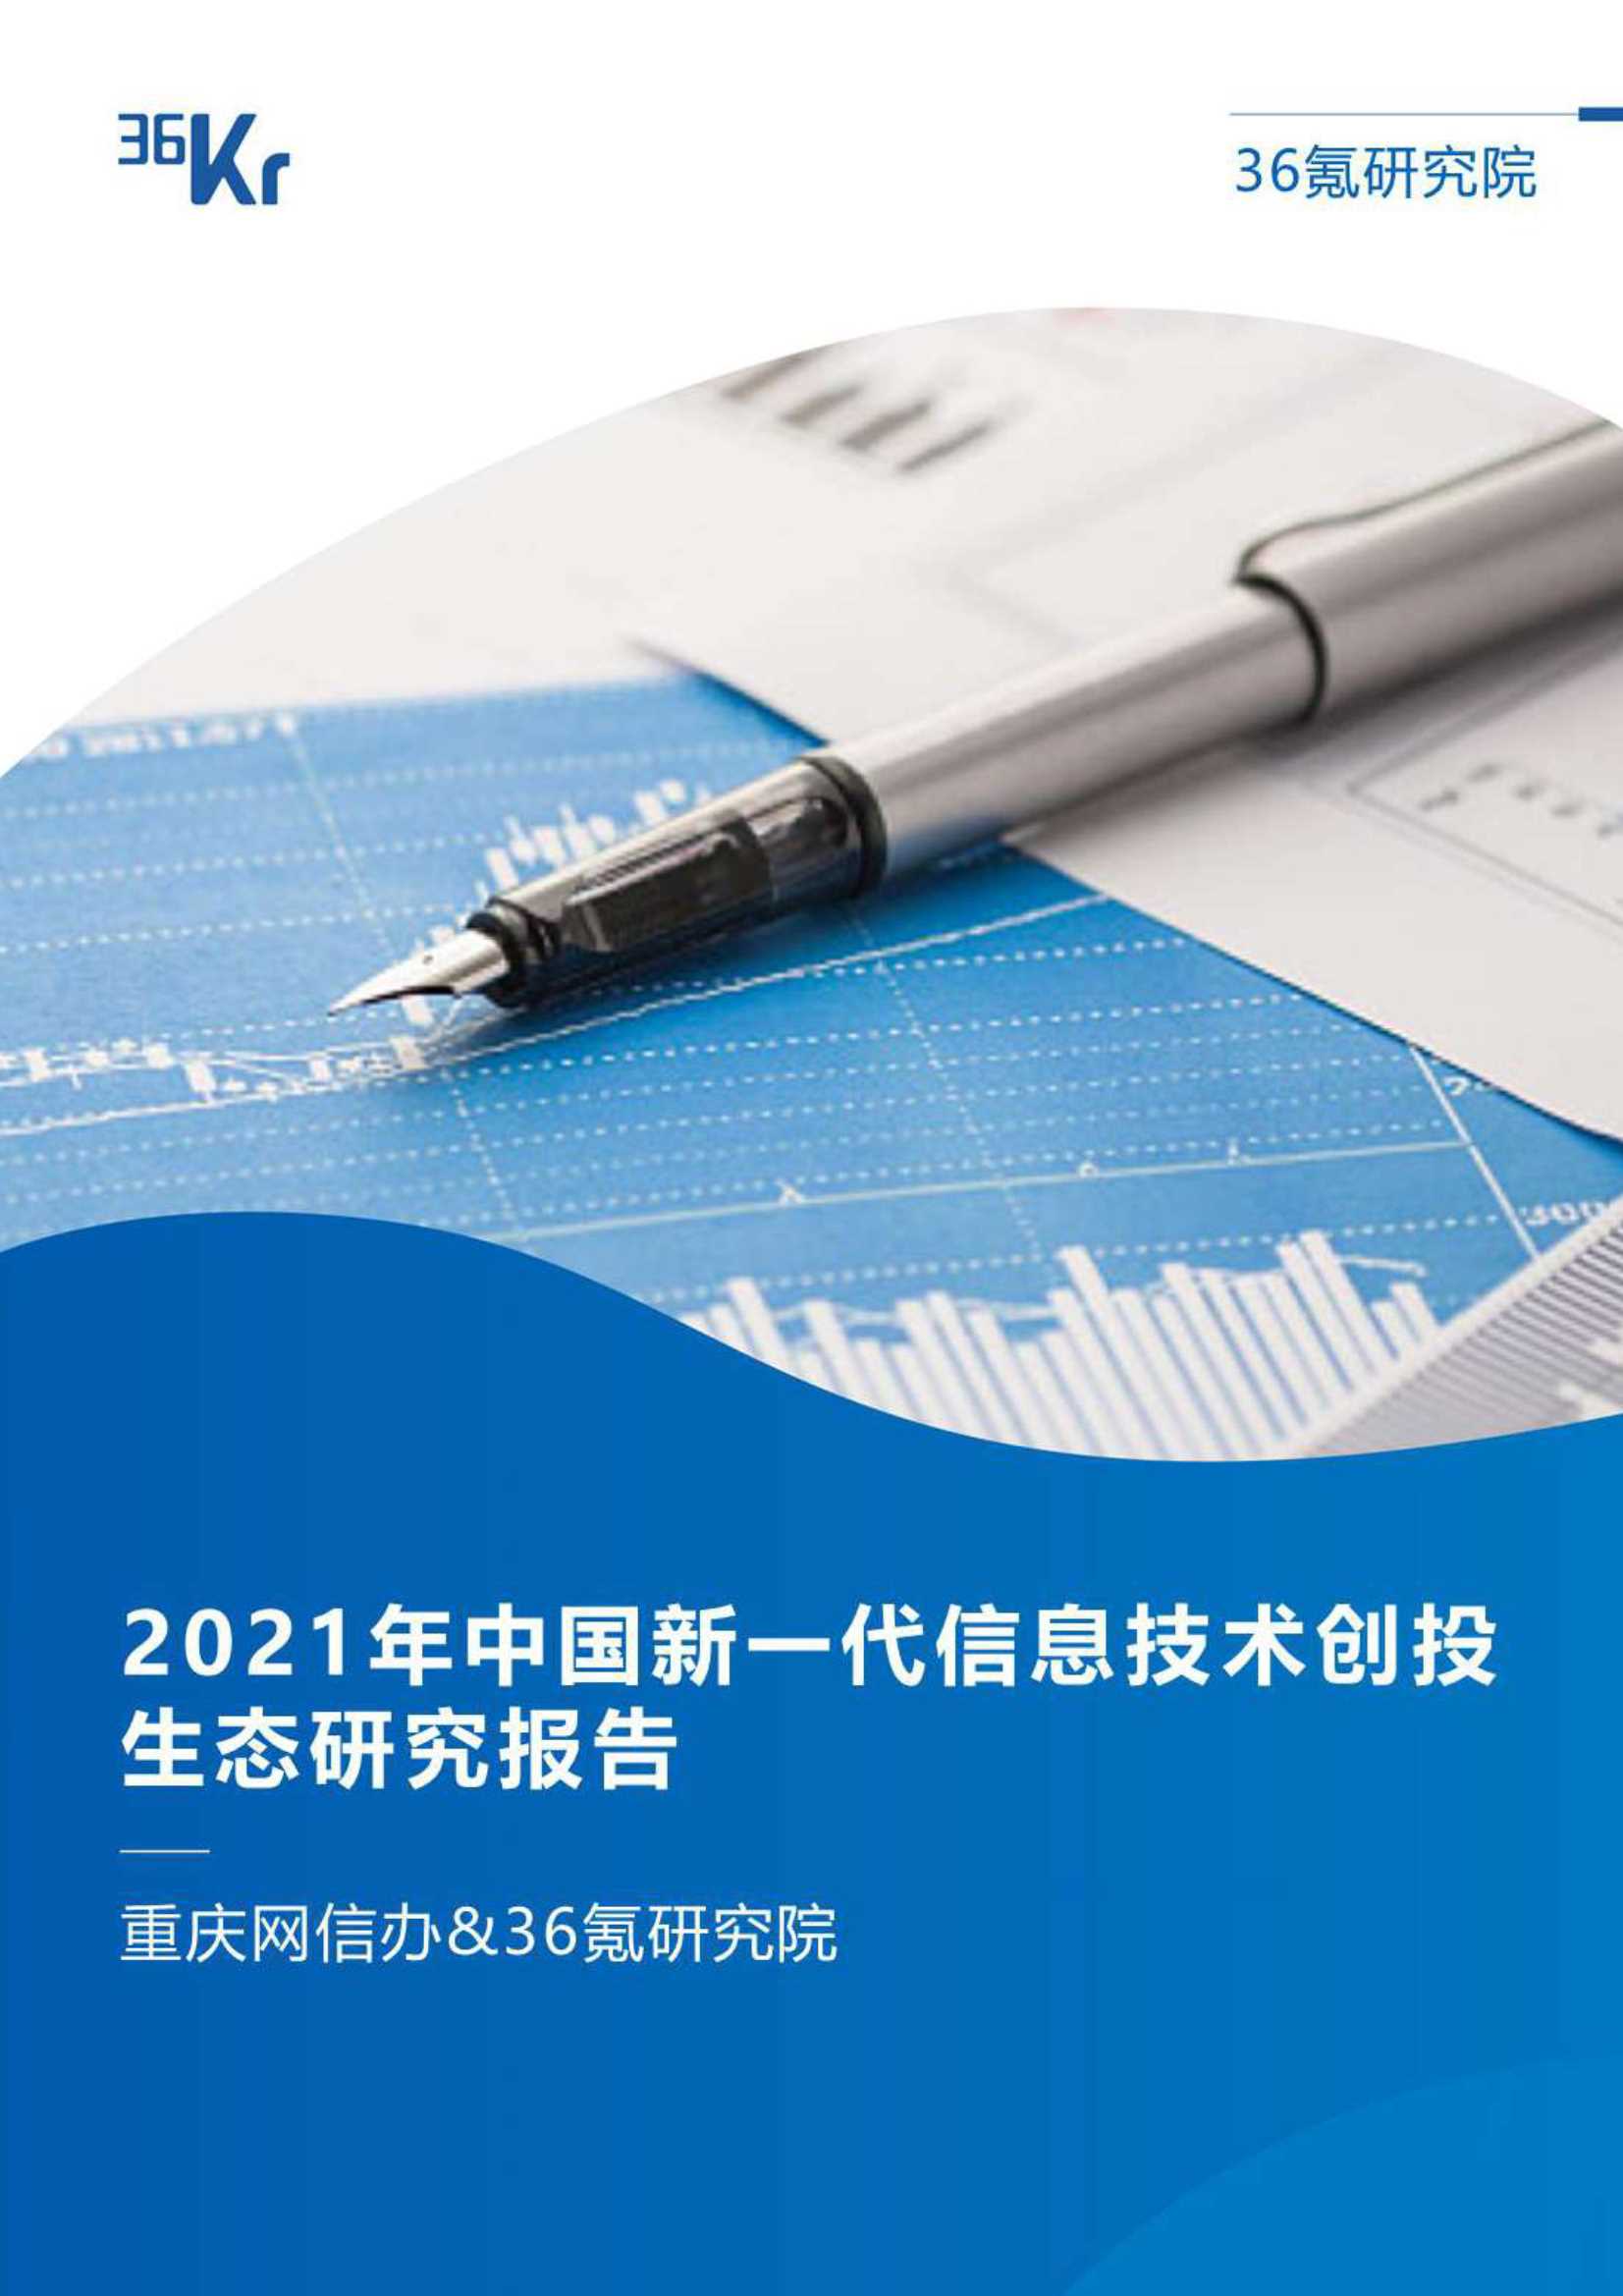 36Kr-2021年中国新一代信息技术创投生态研究报告-2021.12-56页